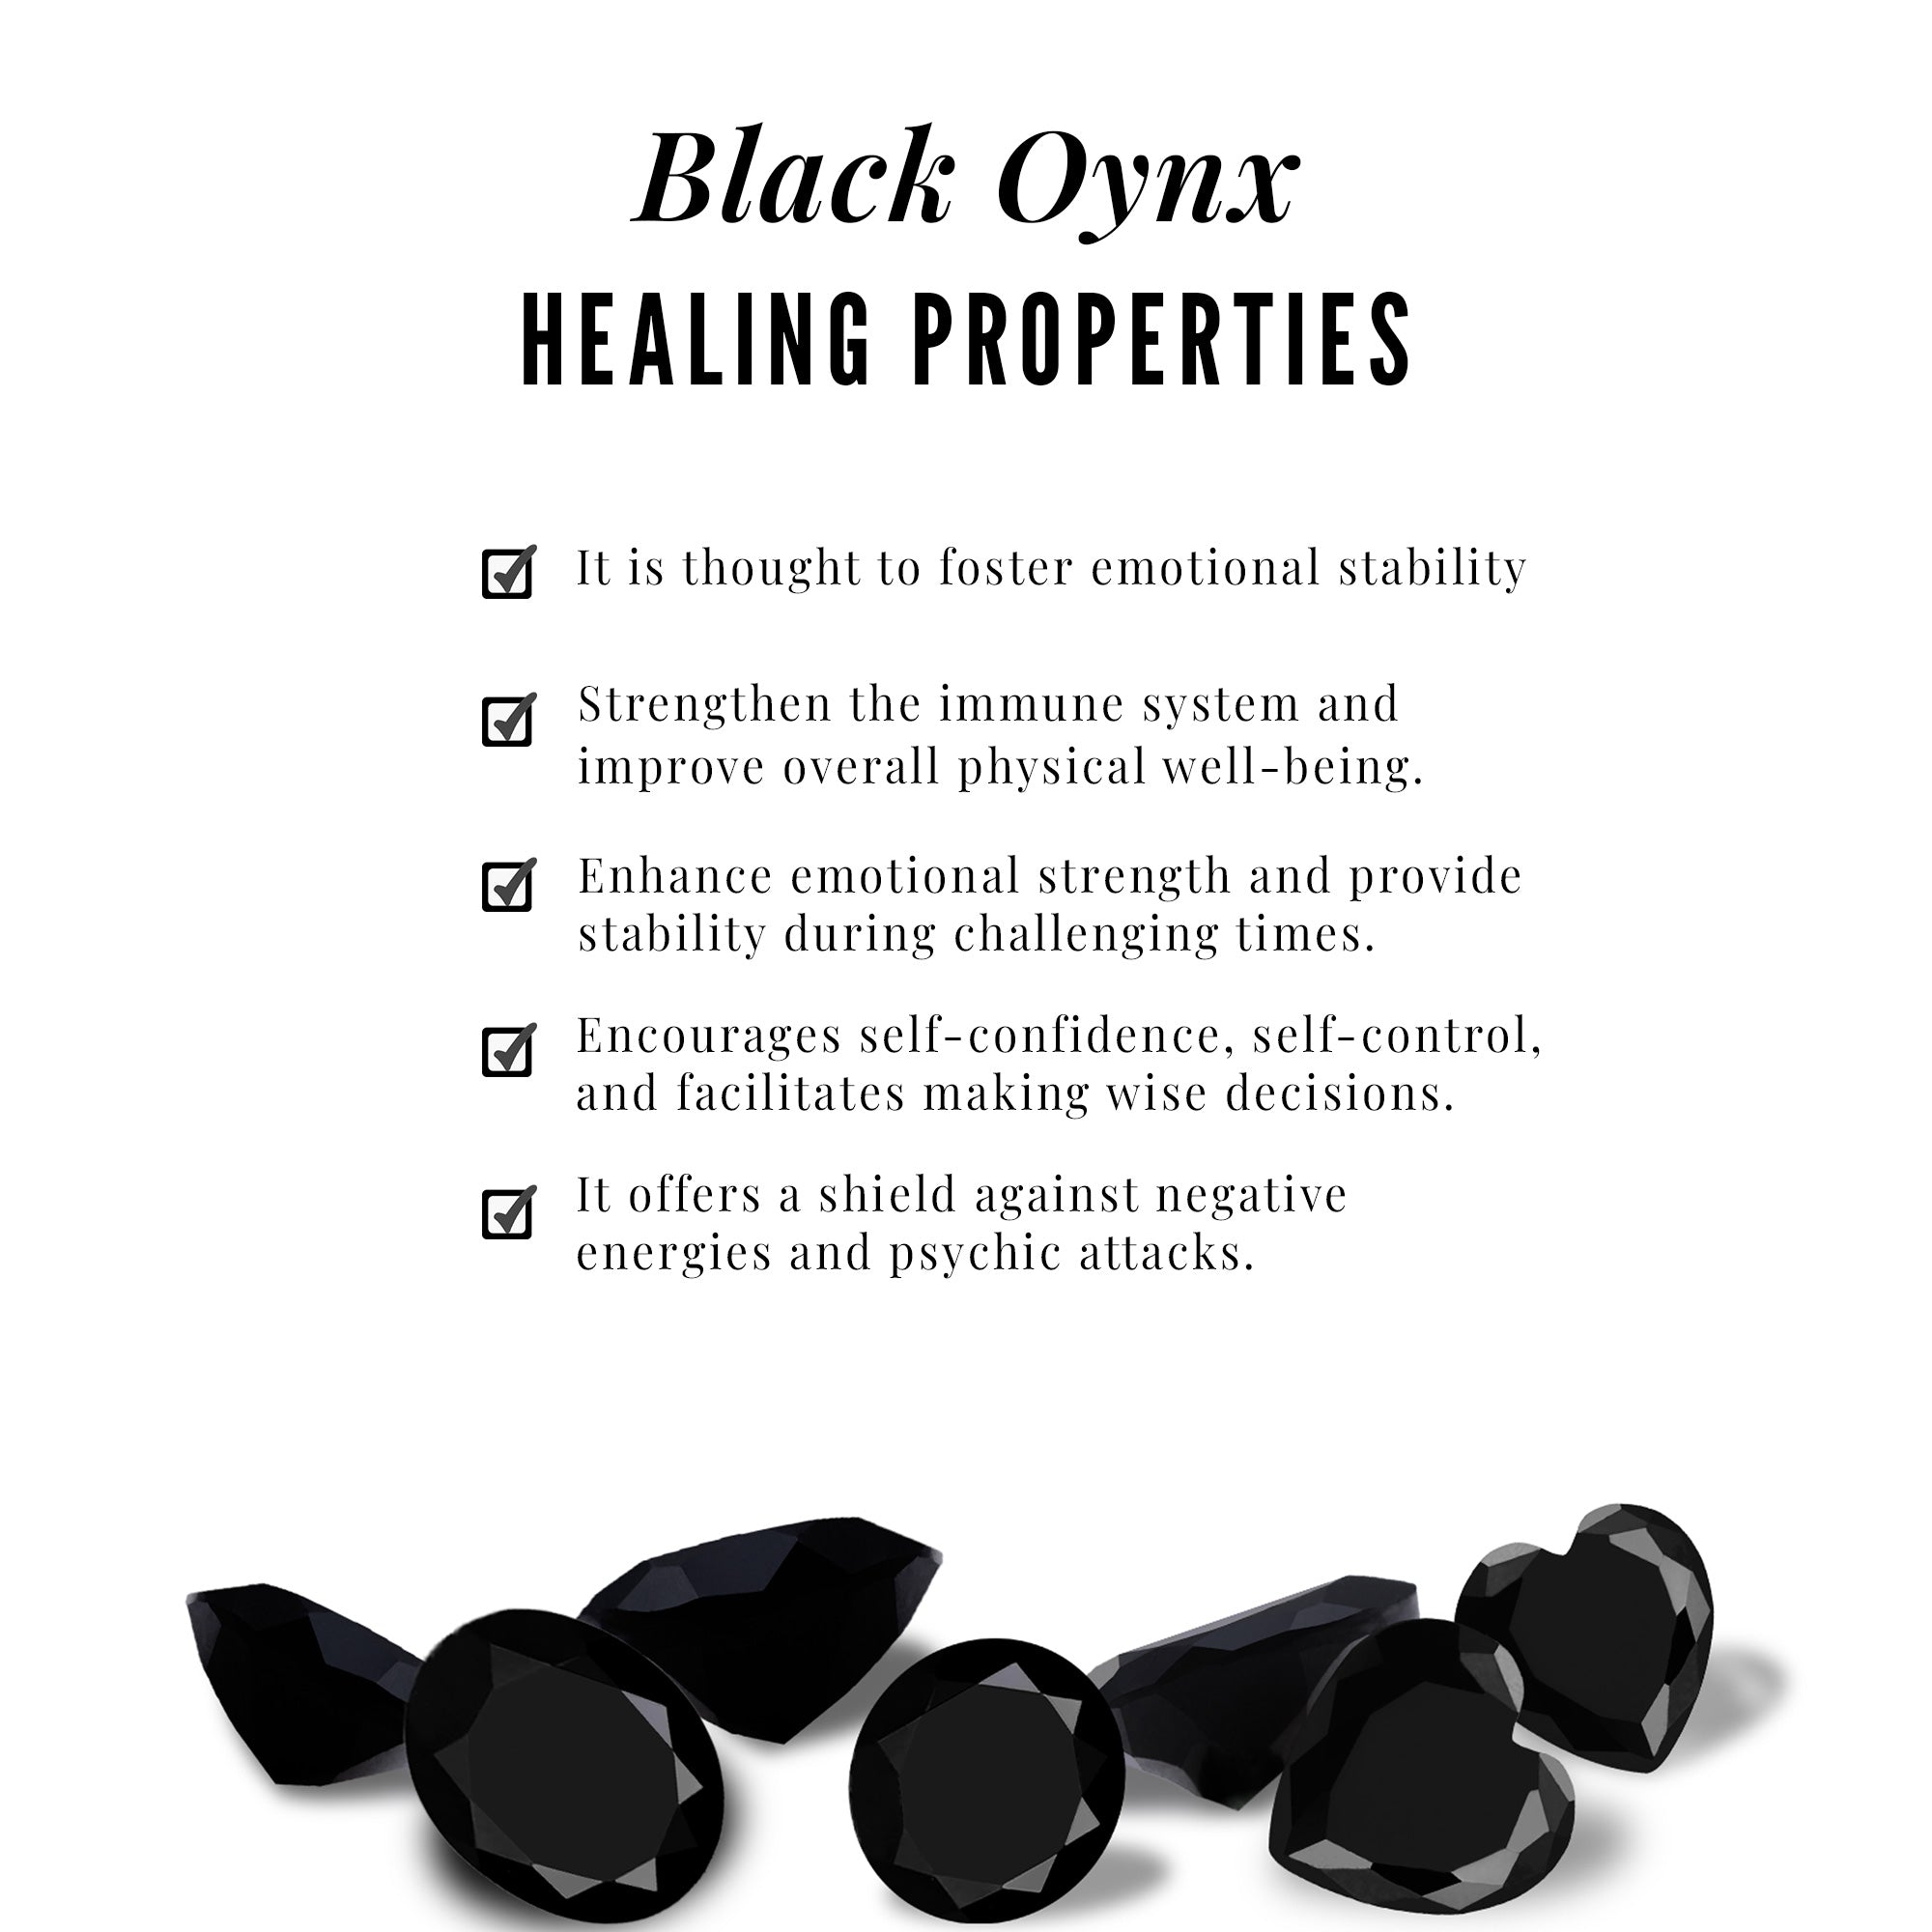 3/4 CT Black Onyx and Diamond Heart Drop Pendant Black Onyx - ( AAA ) - Quality - Rosec Jewels